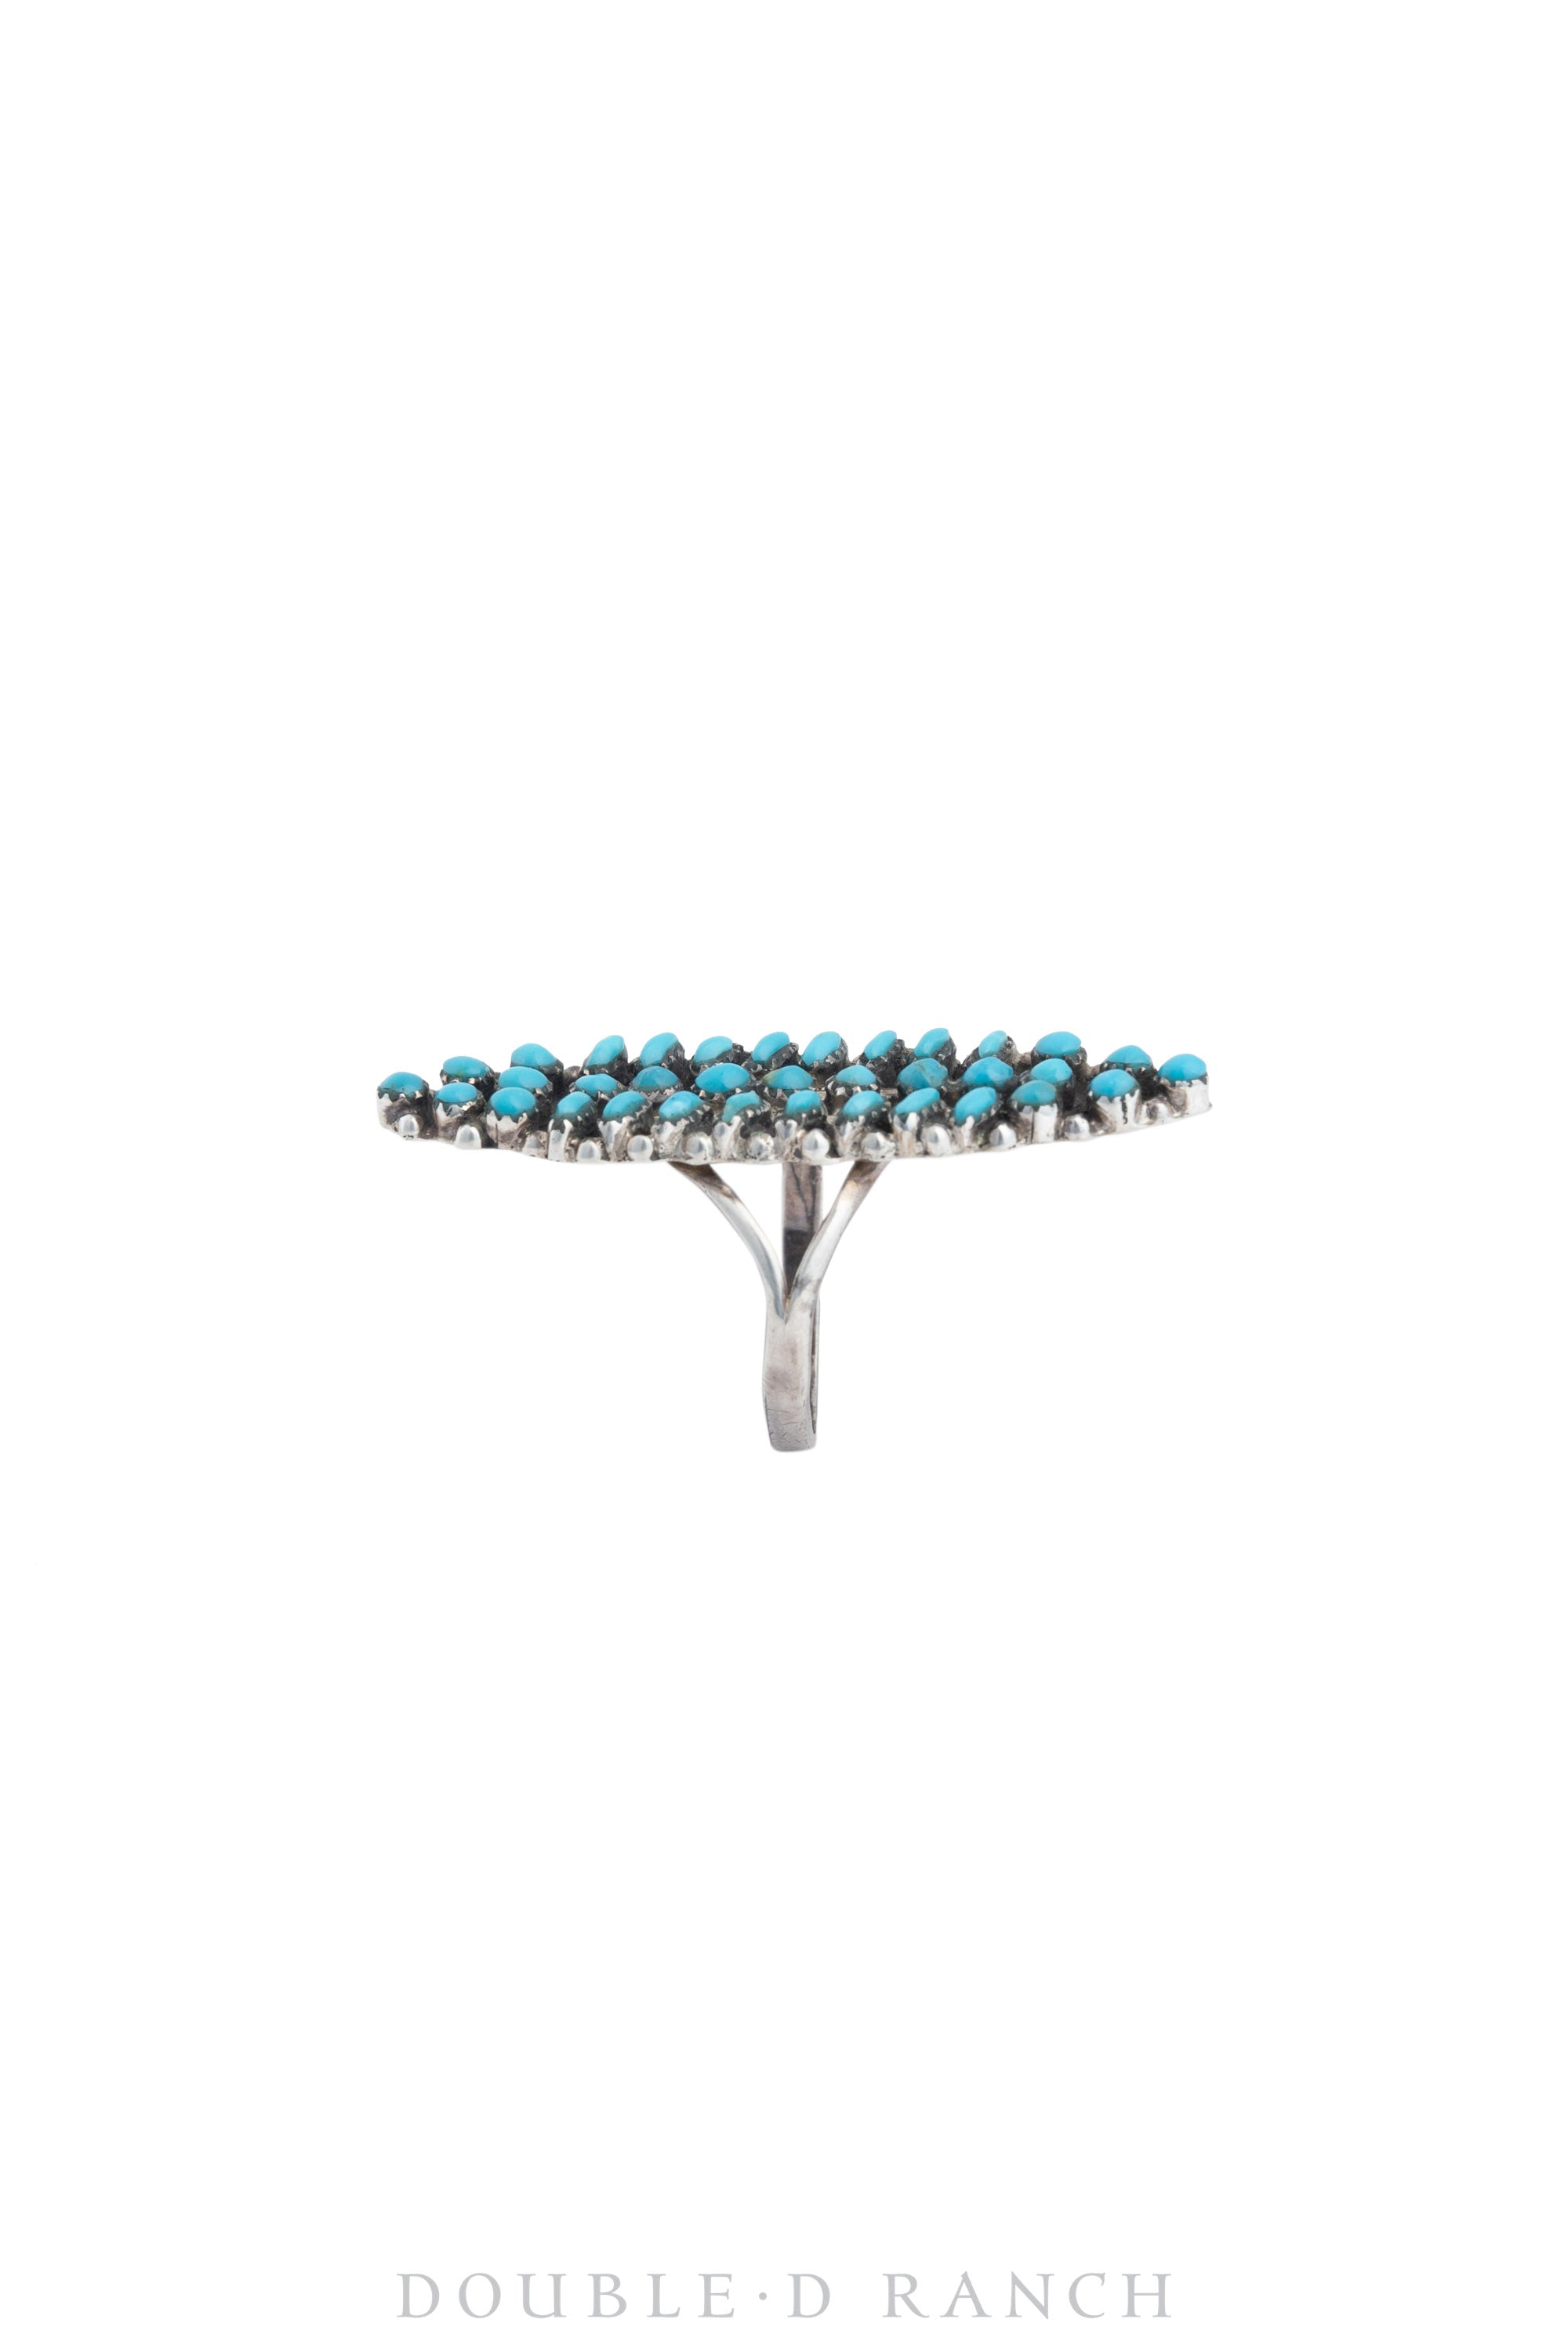 Ring, Cluster, Turquoise, Zuni Needlepoint, Vintage, 1447